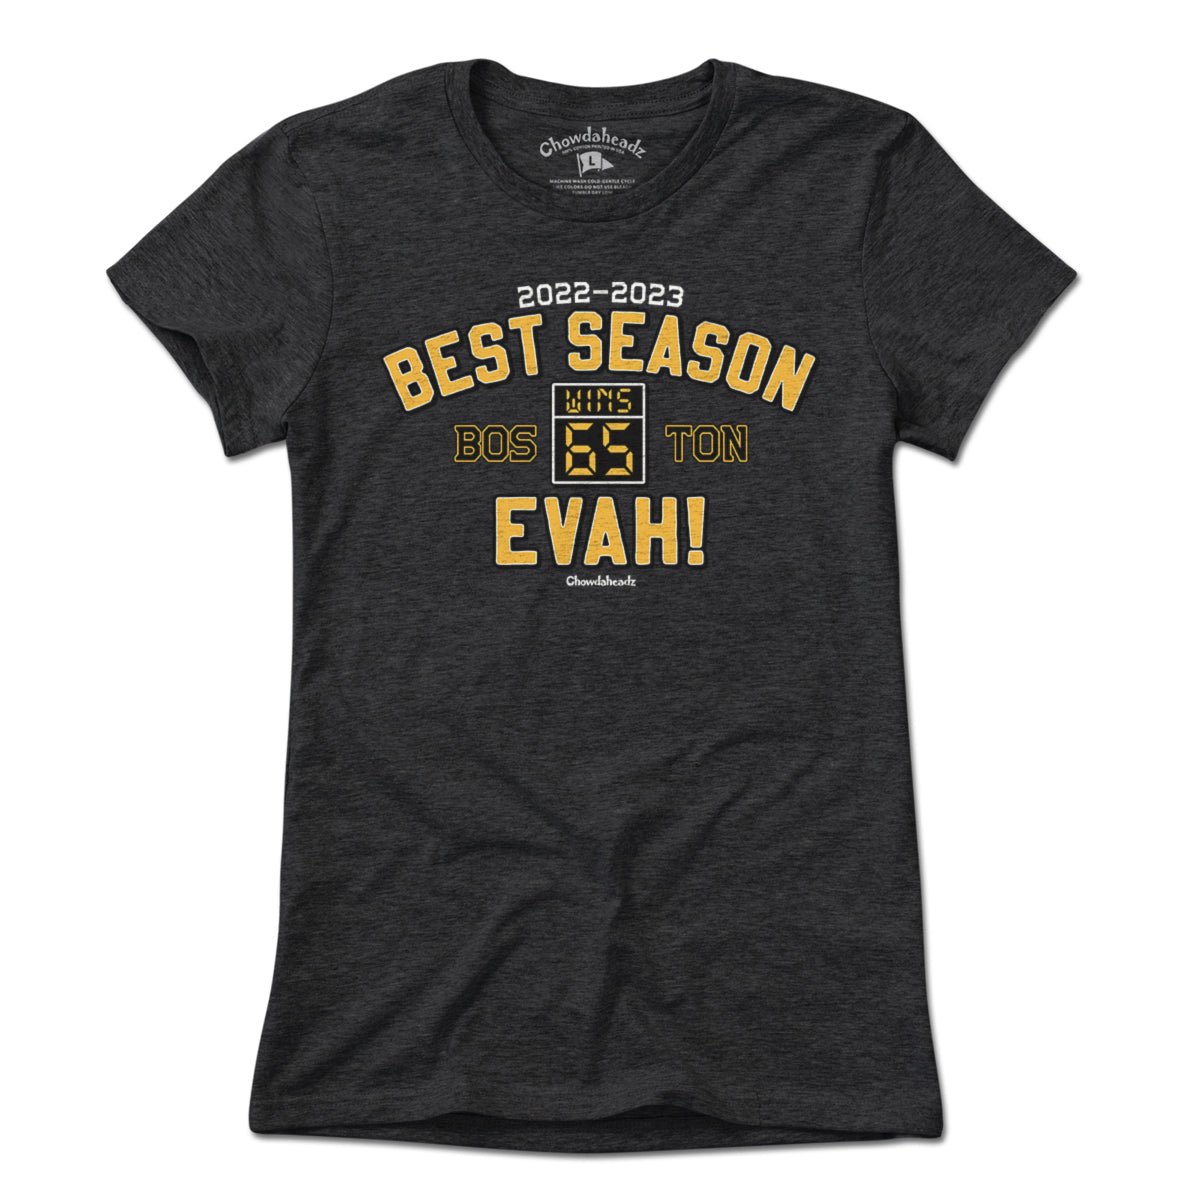 Best Season Evah 65 Wins T-shirt - Chowdaheadz